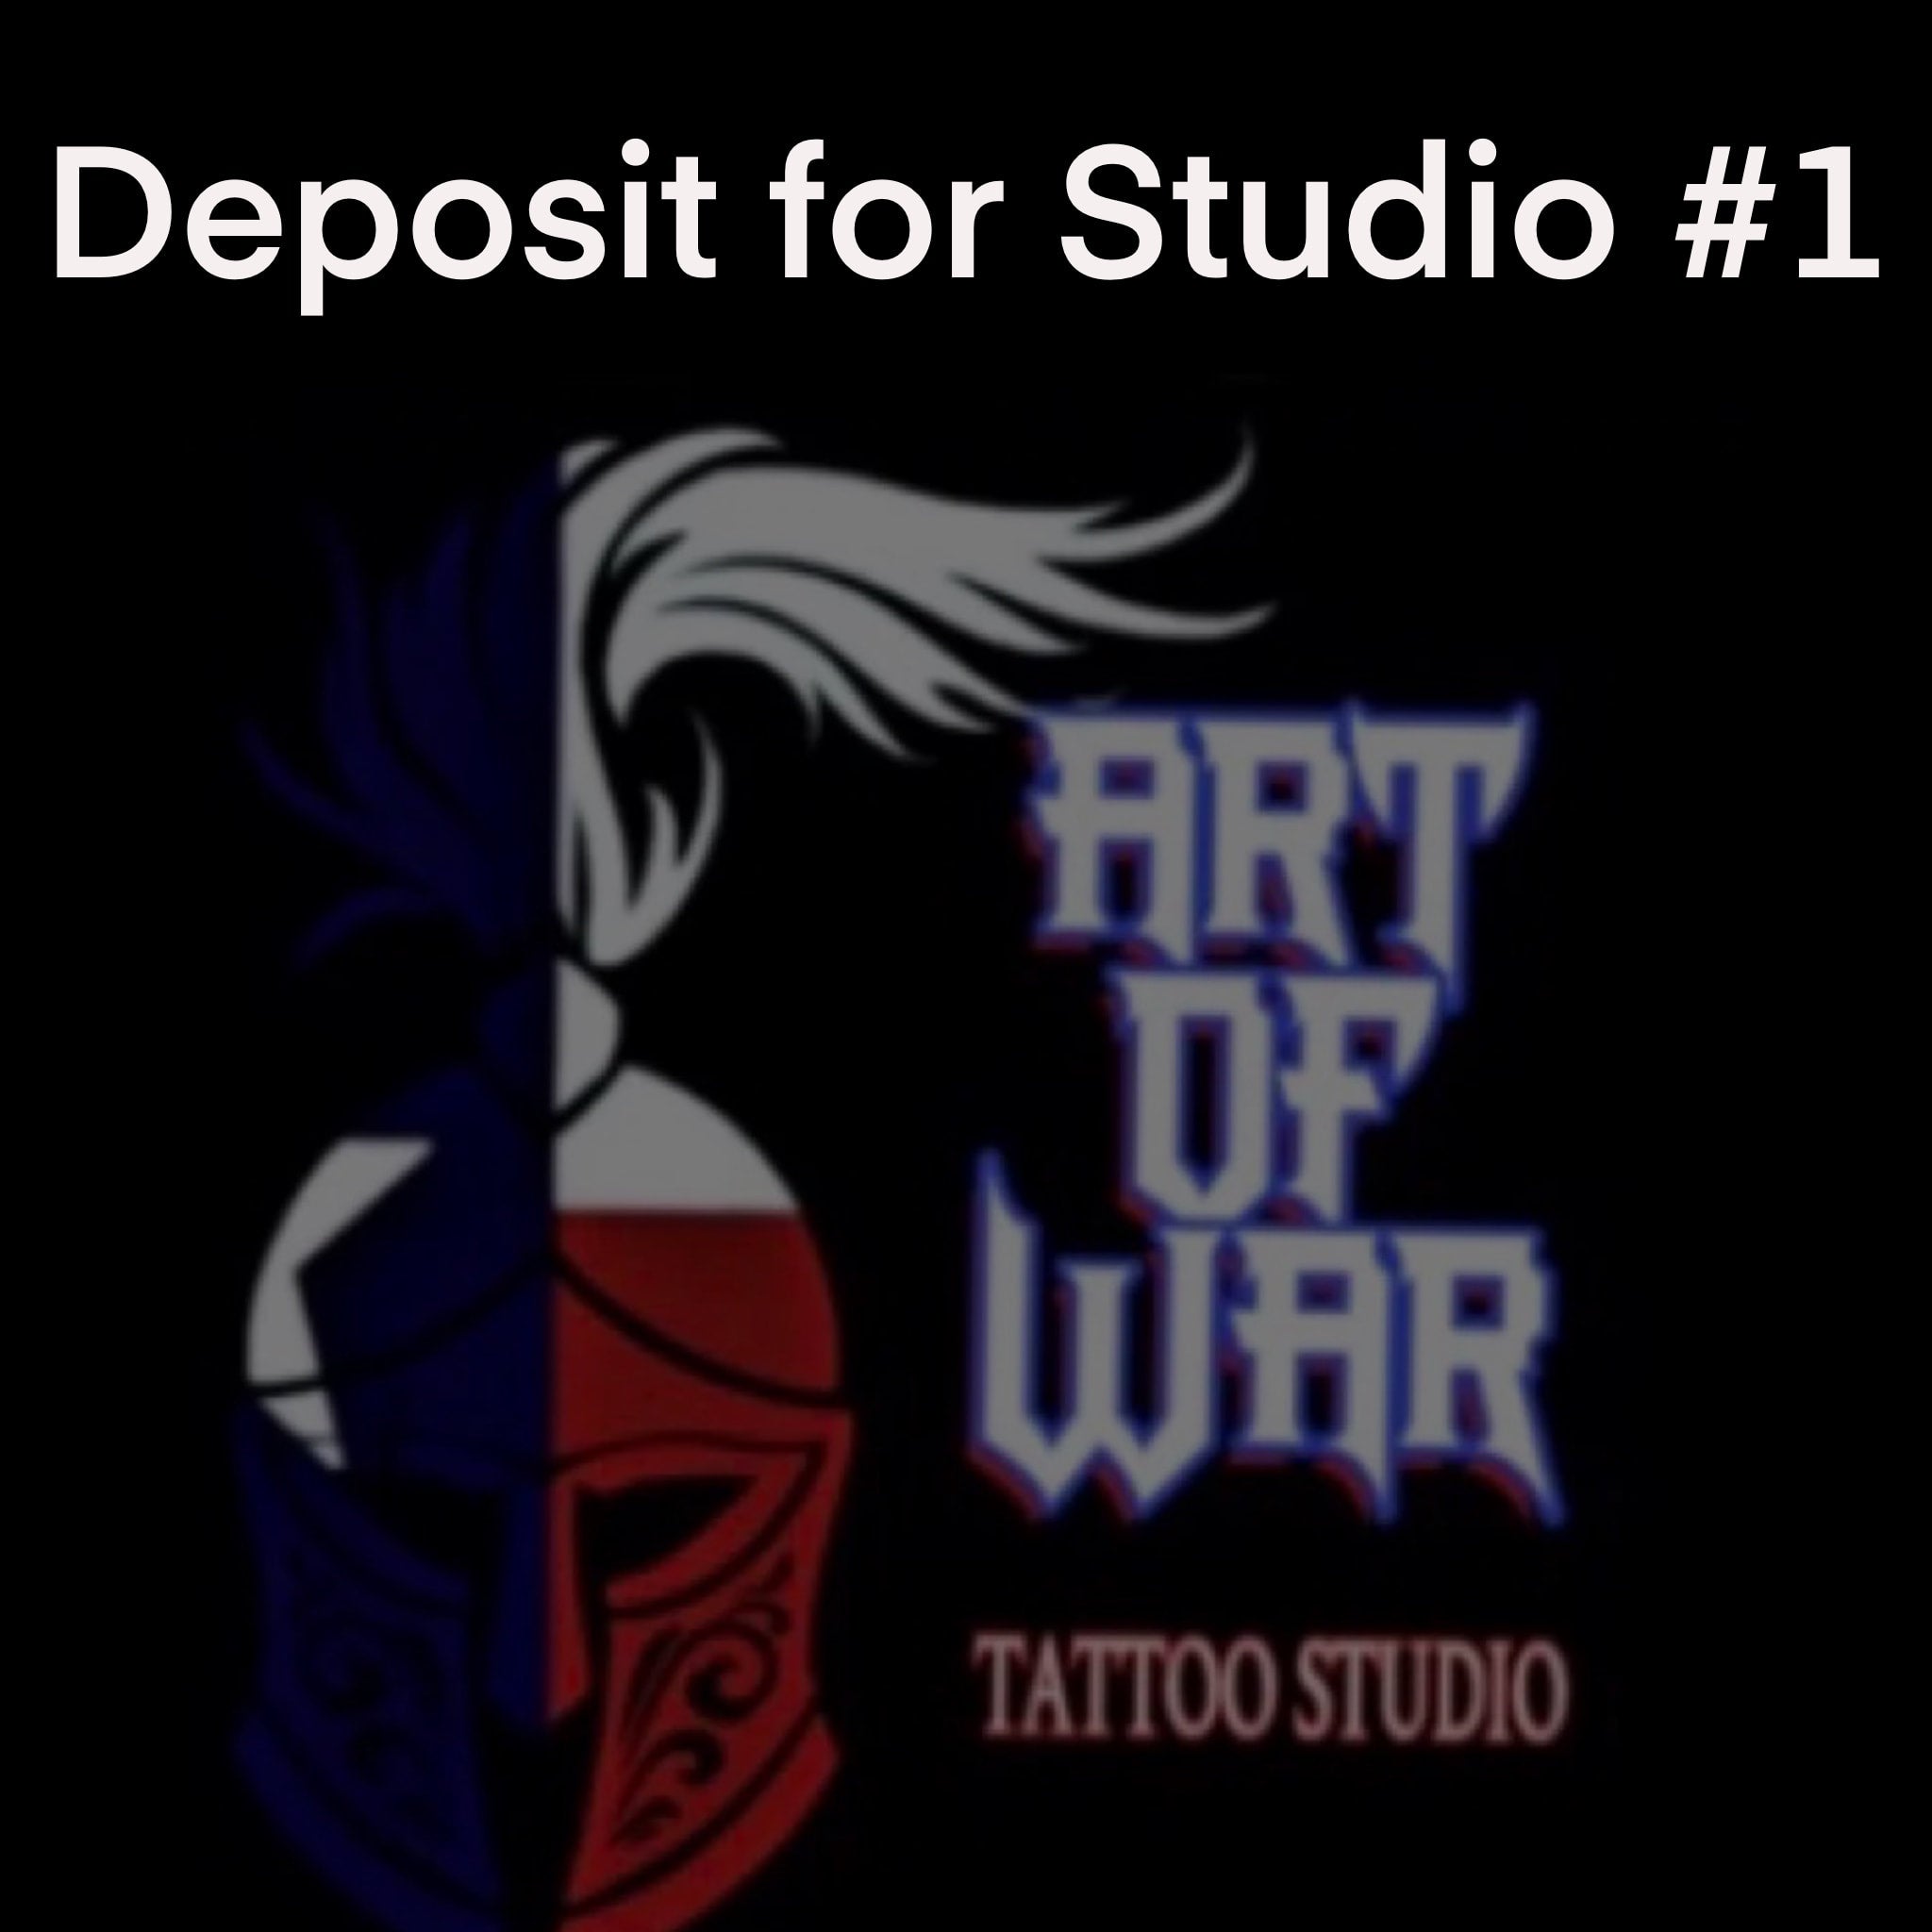 Walk-In Warrior Tattoo Company | Tattoo Studio in Baton Rouge LA